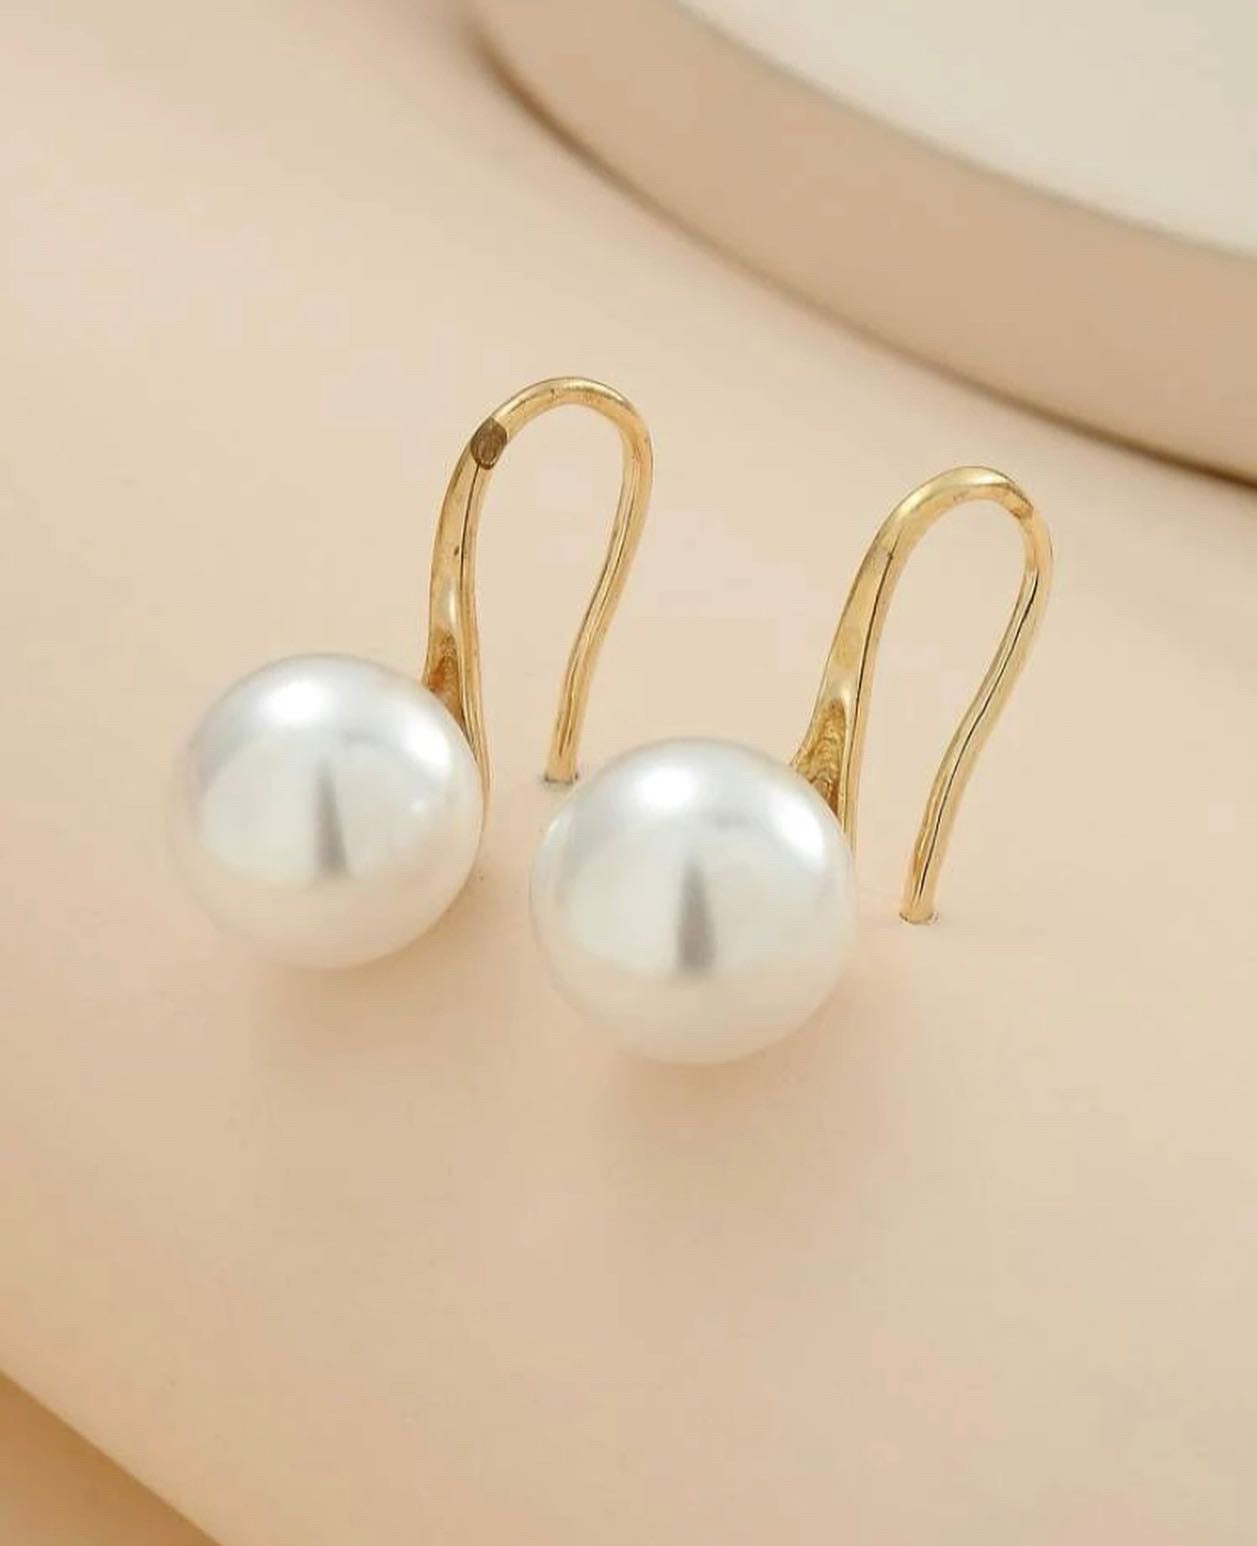 White cultured pearl earrings